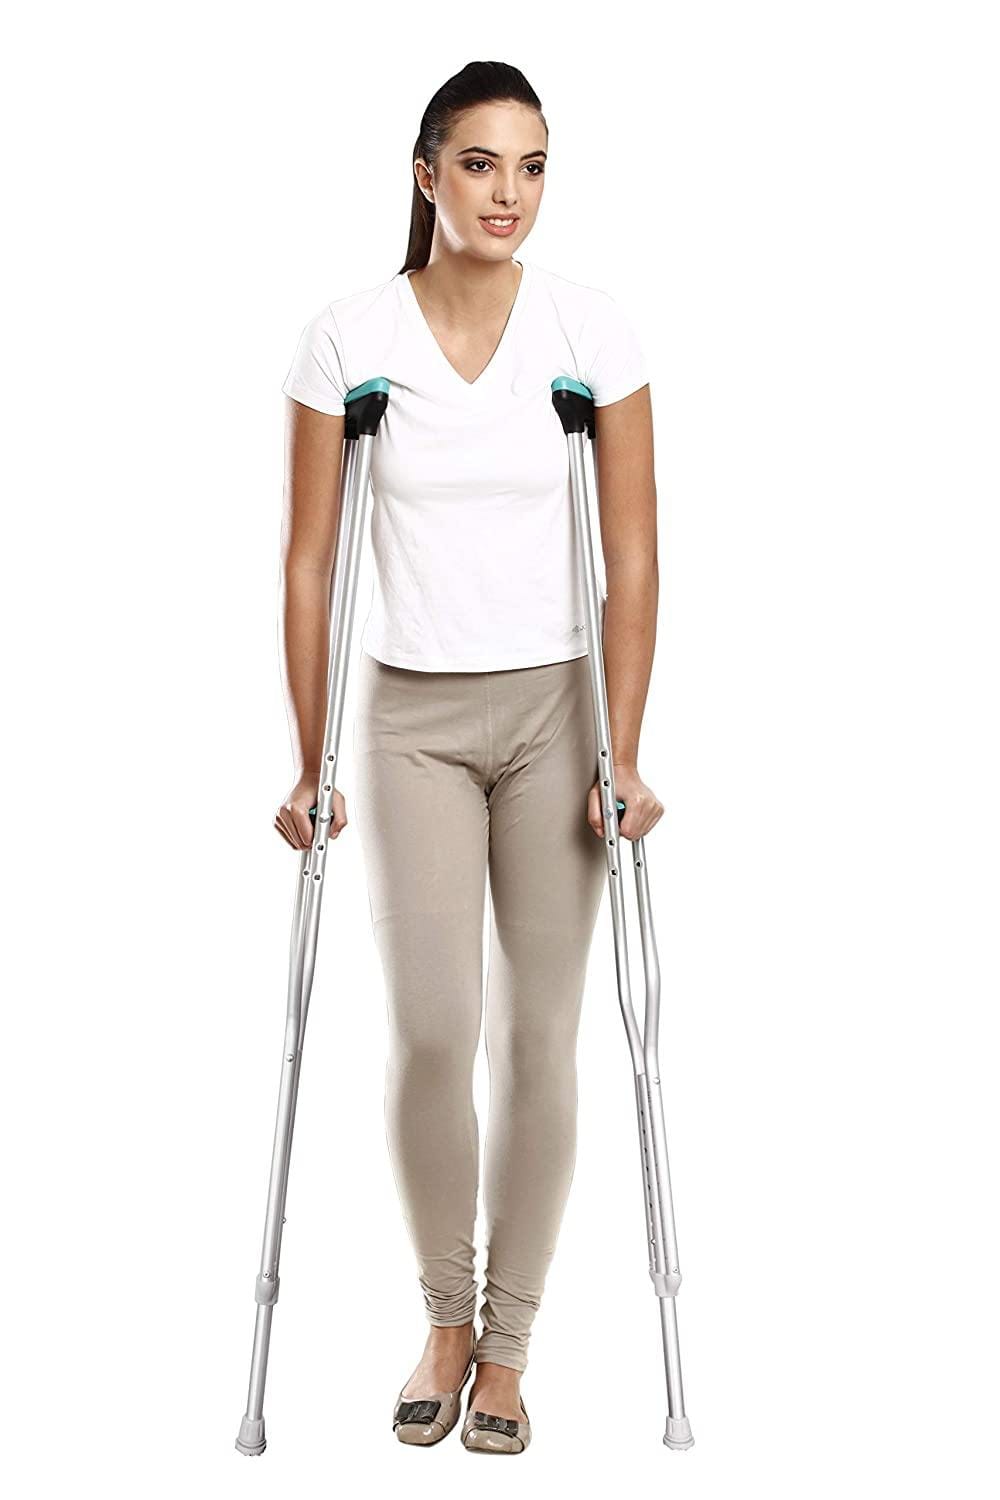 Tynor Auxiliary Crutch L-21-Health & Personal Care-dealsplant